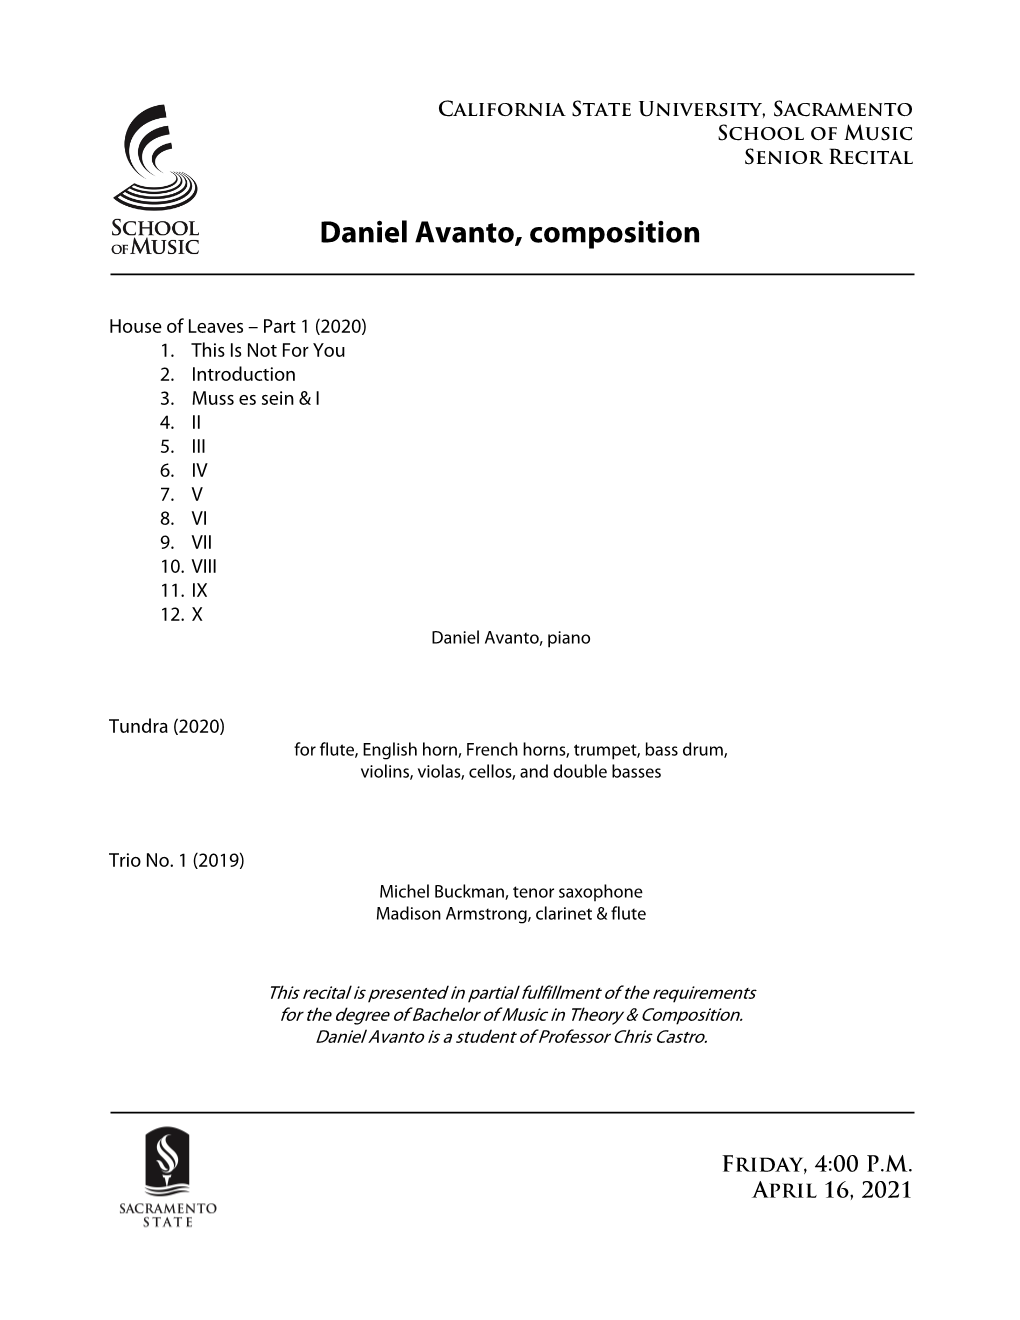 4.16.21 Daniel Avanto, Composition